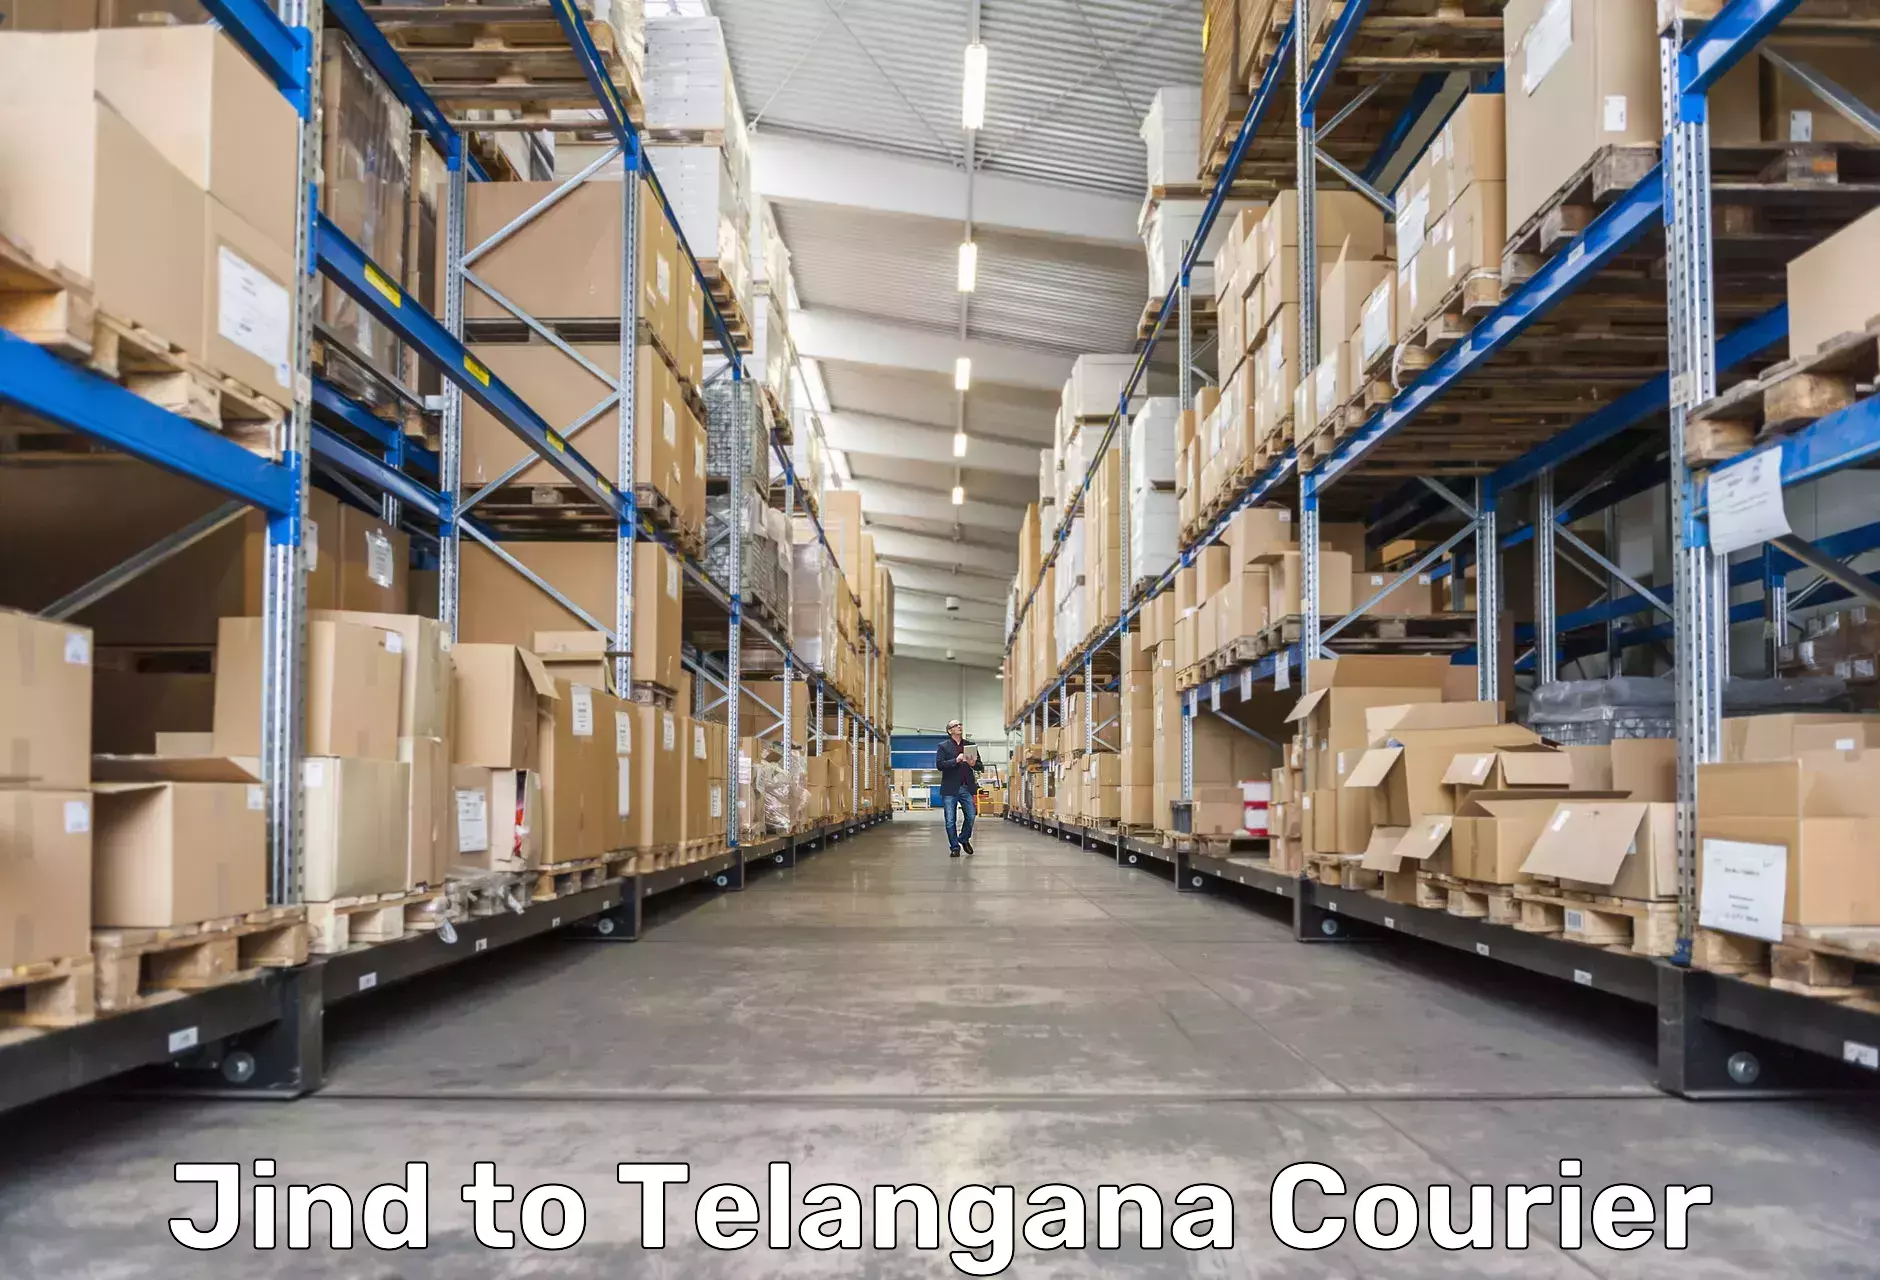 Specialized shipment handling Jind to Telangana